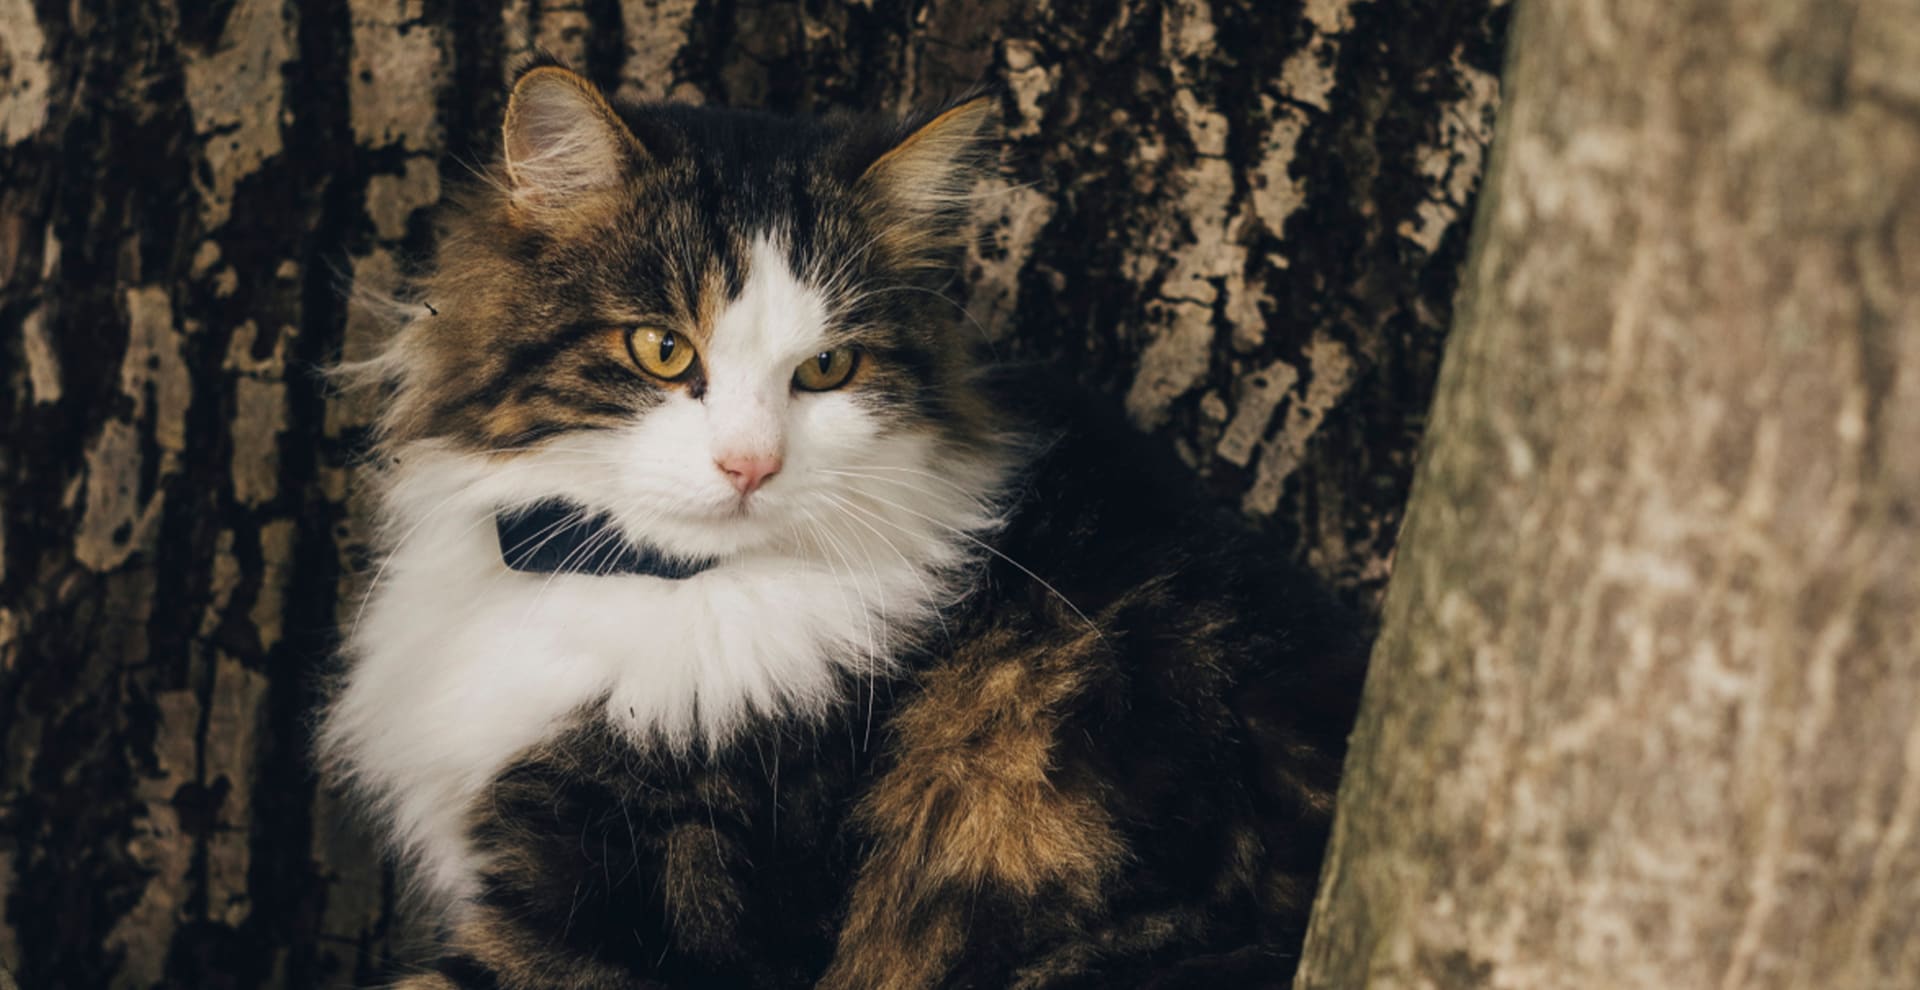 Cat sitting in a tree